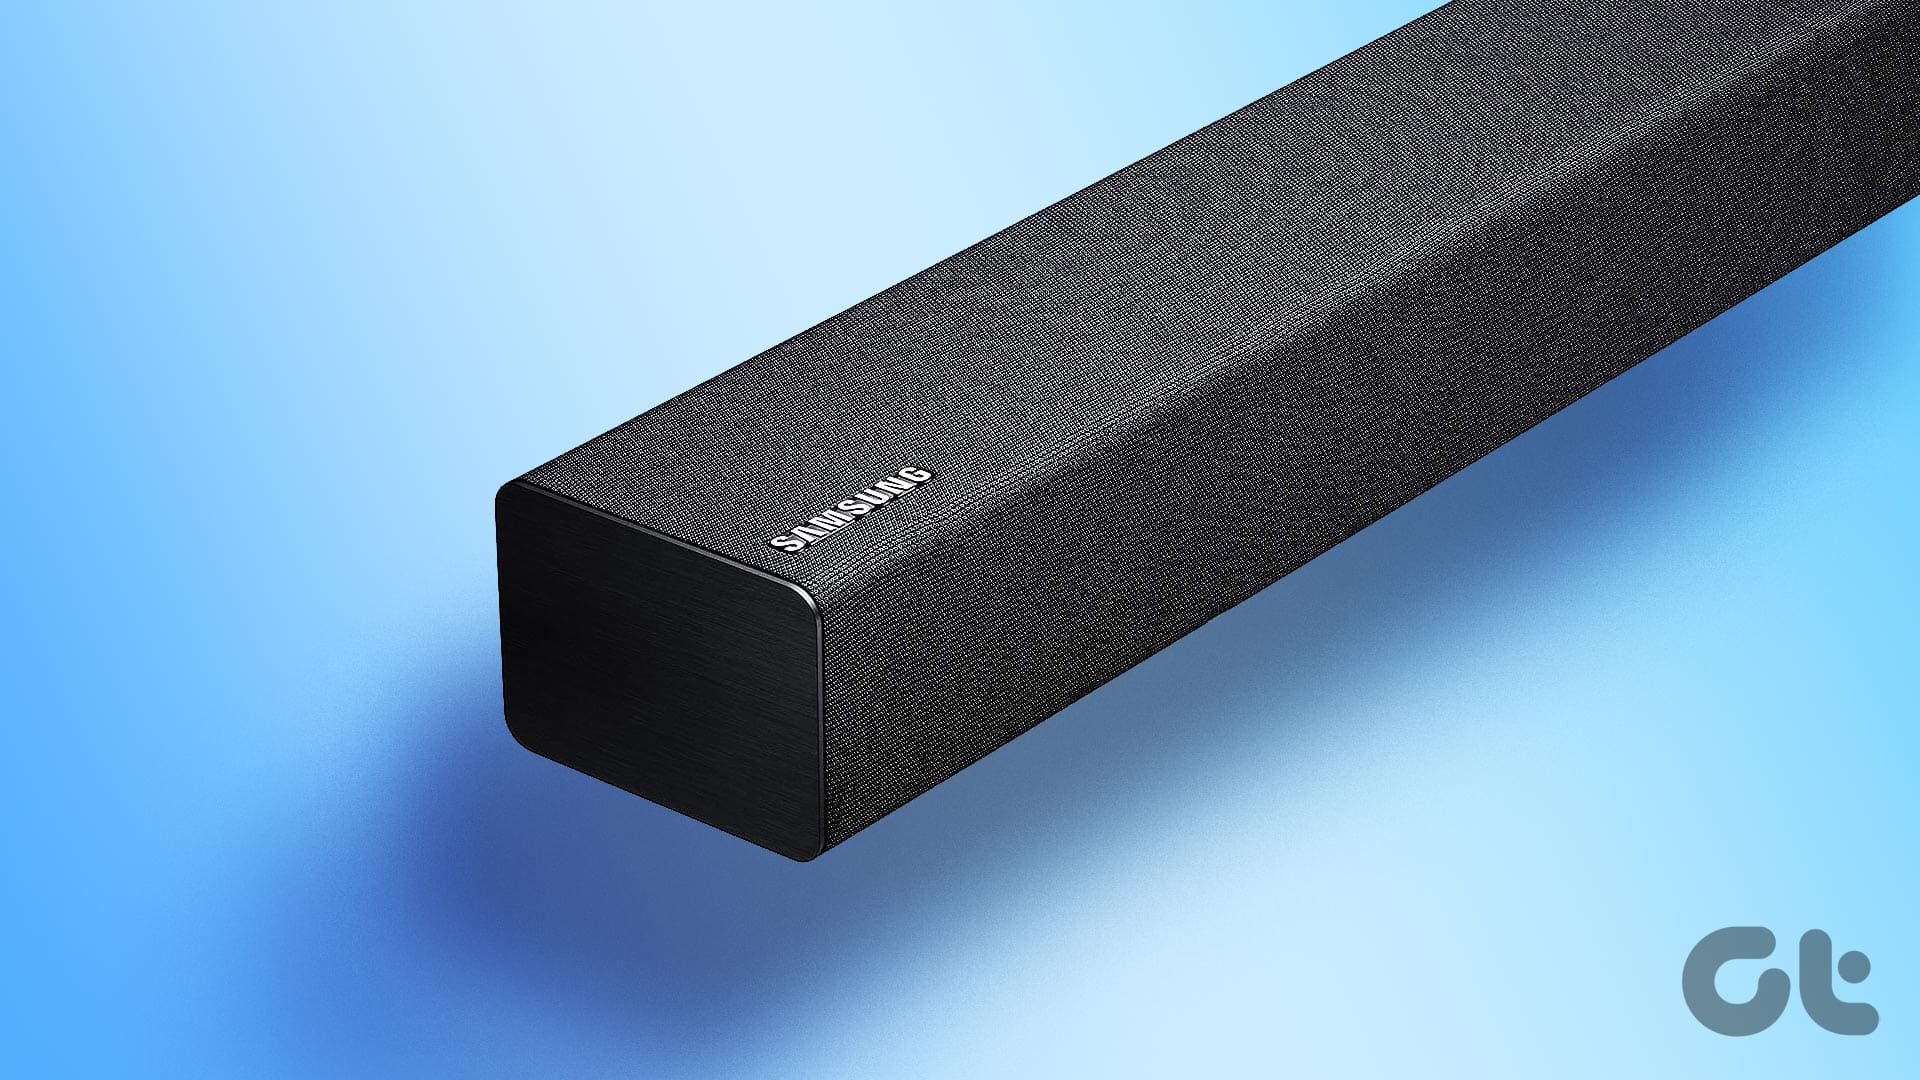 Best Soundbars for Samsung TVs